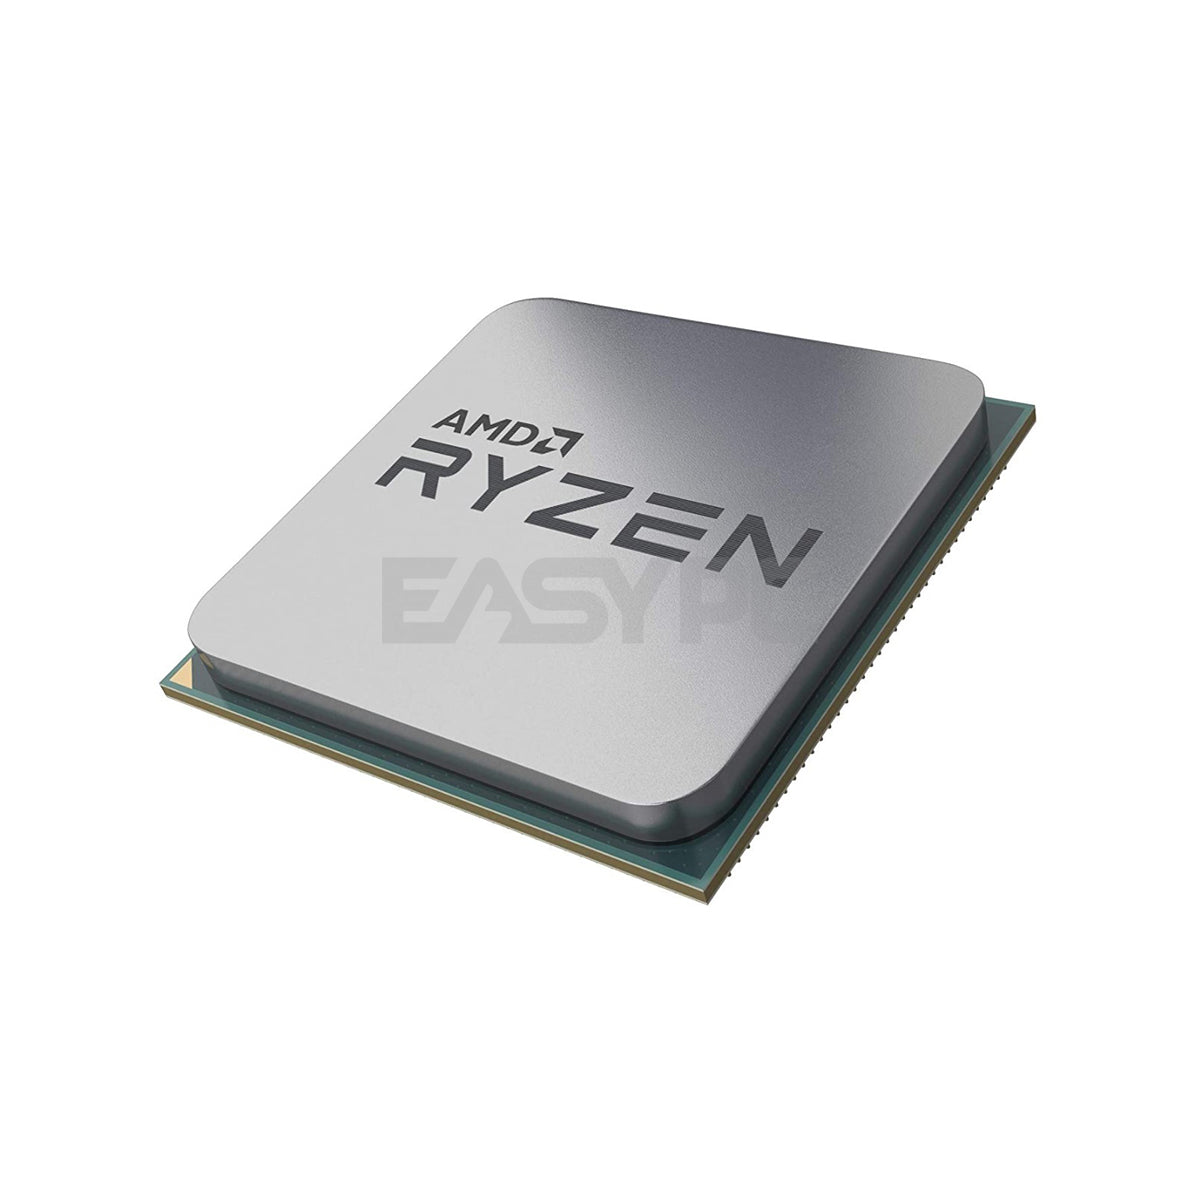 AMD Ryzen 3 3300X Socket Am4 3.8ghz with Wraith Stealth Cooler, AMD 